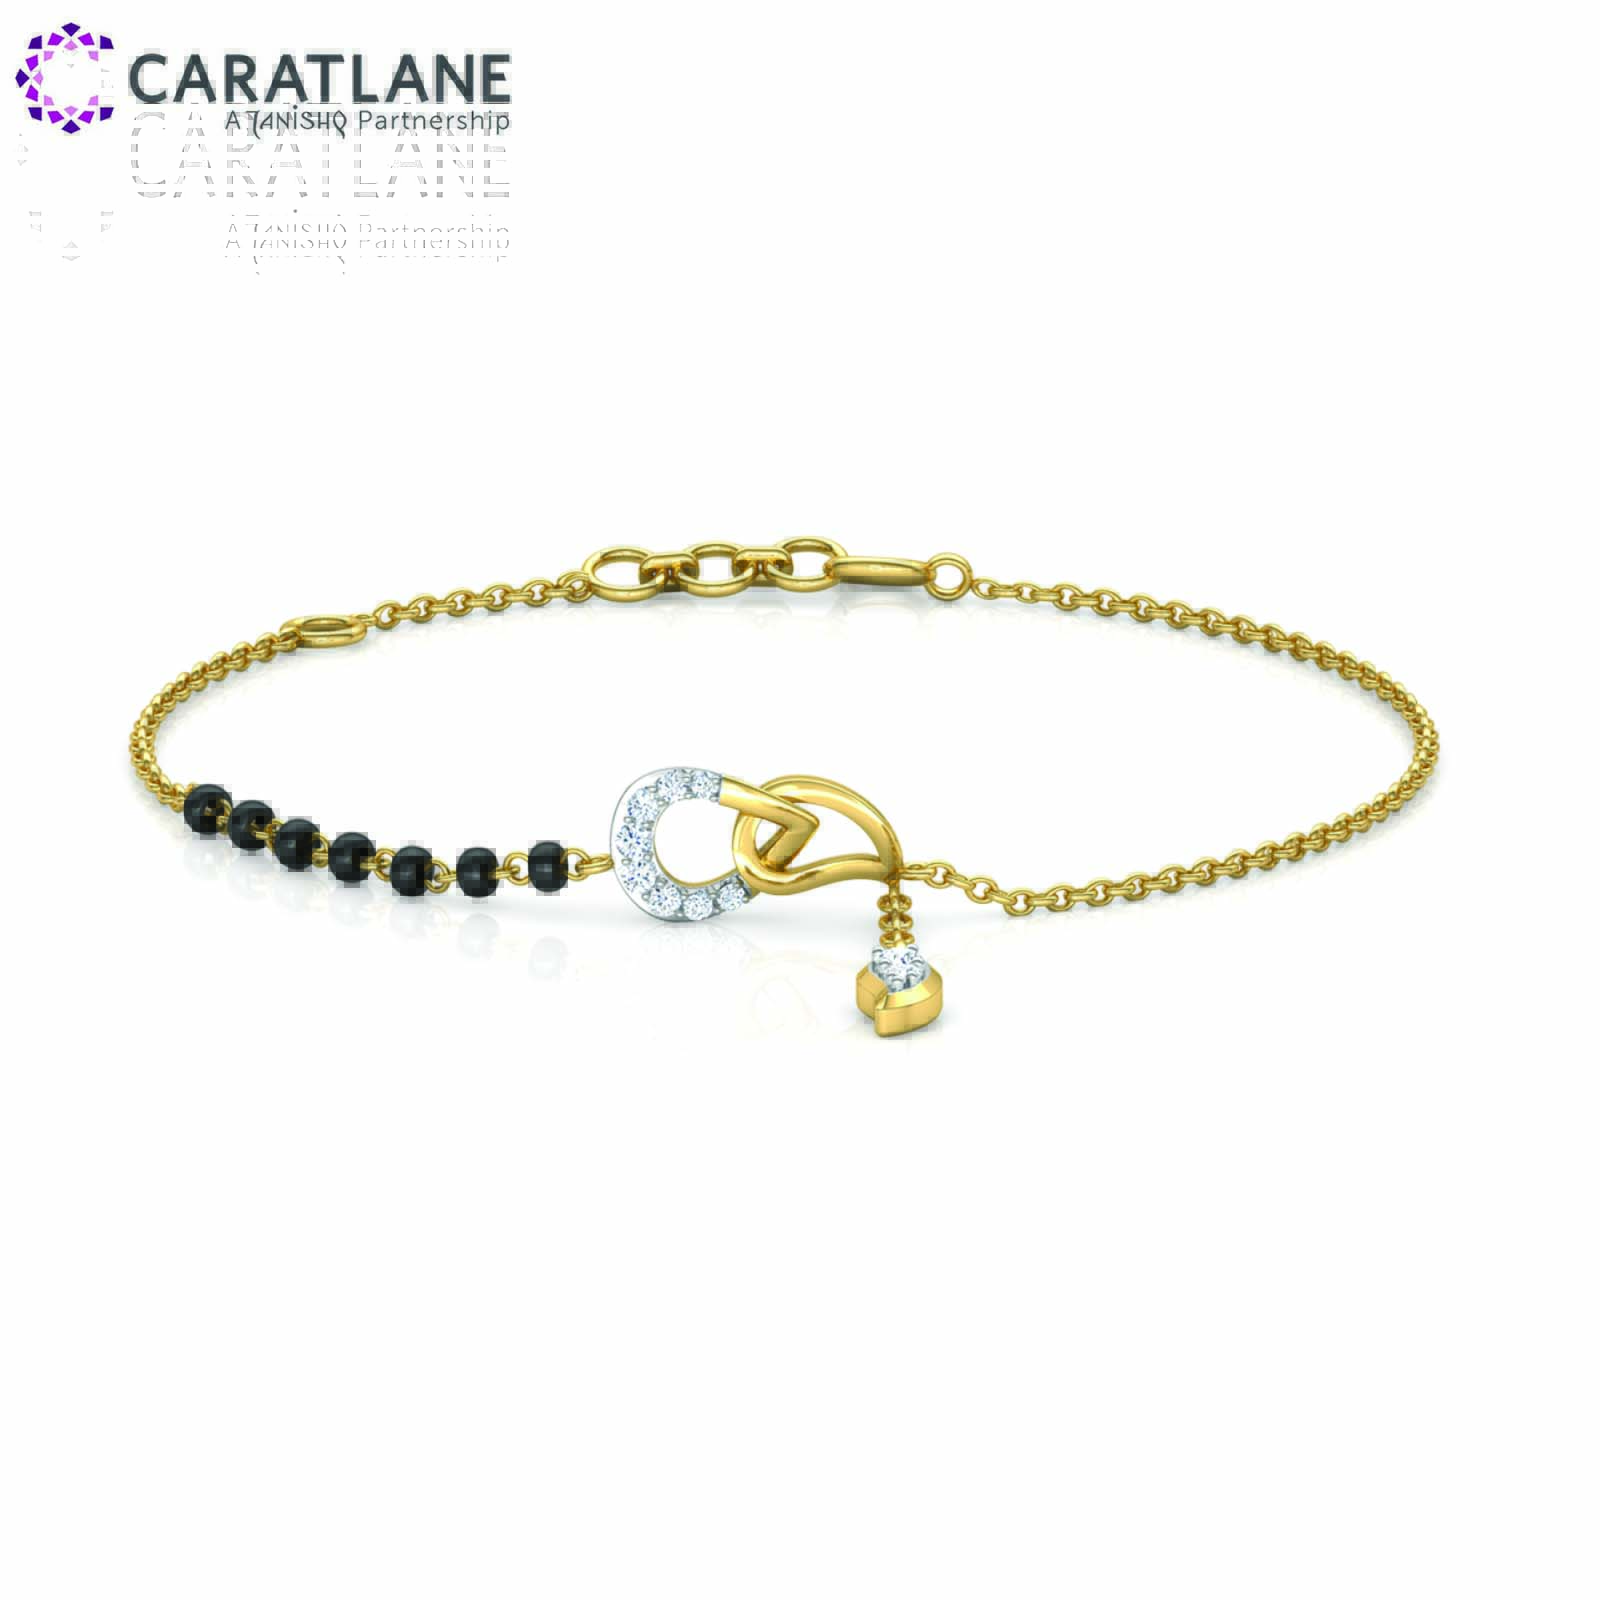 Caratlane Tanishq Bracelets Best Sale, SAVE 53% - jfmb.eu